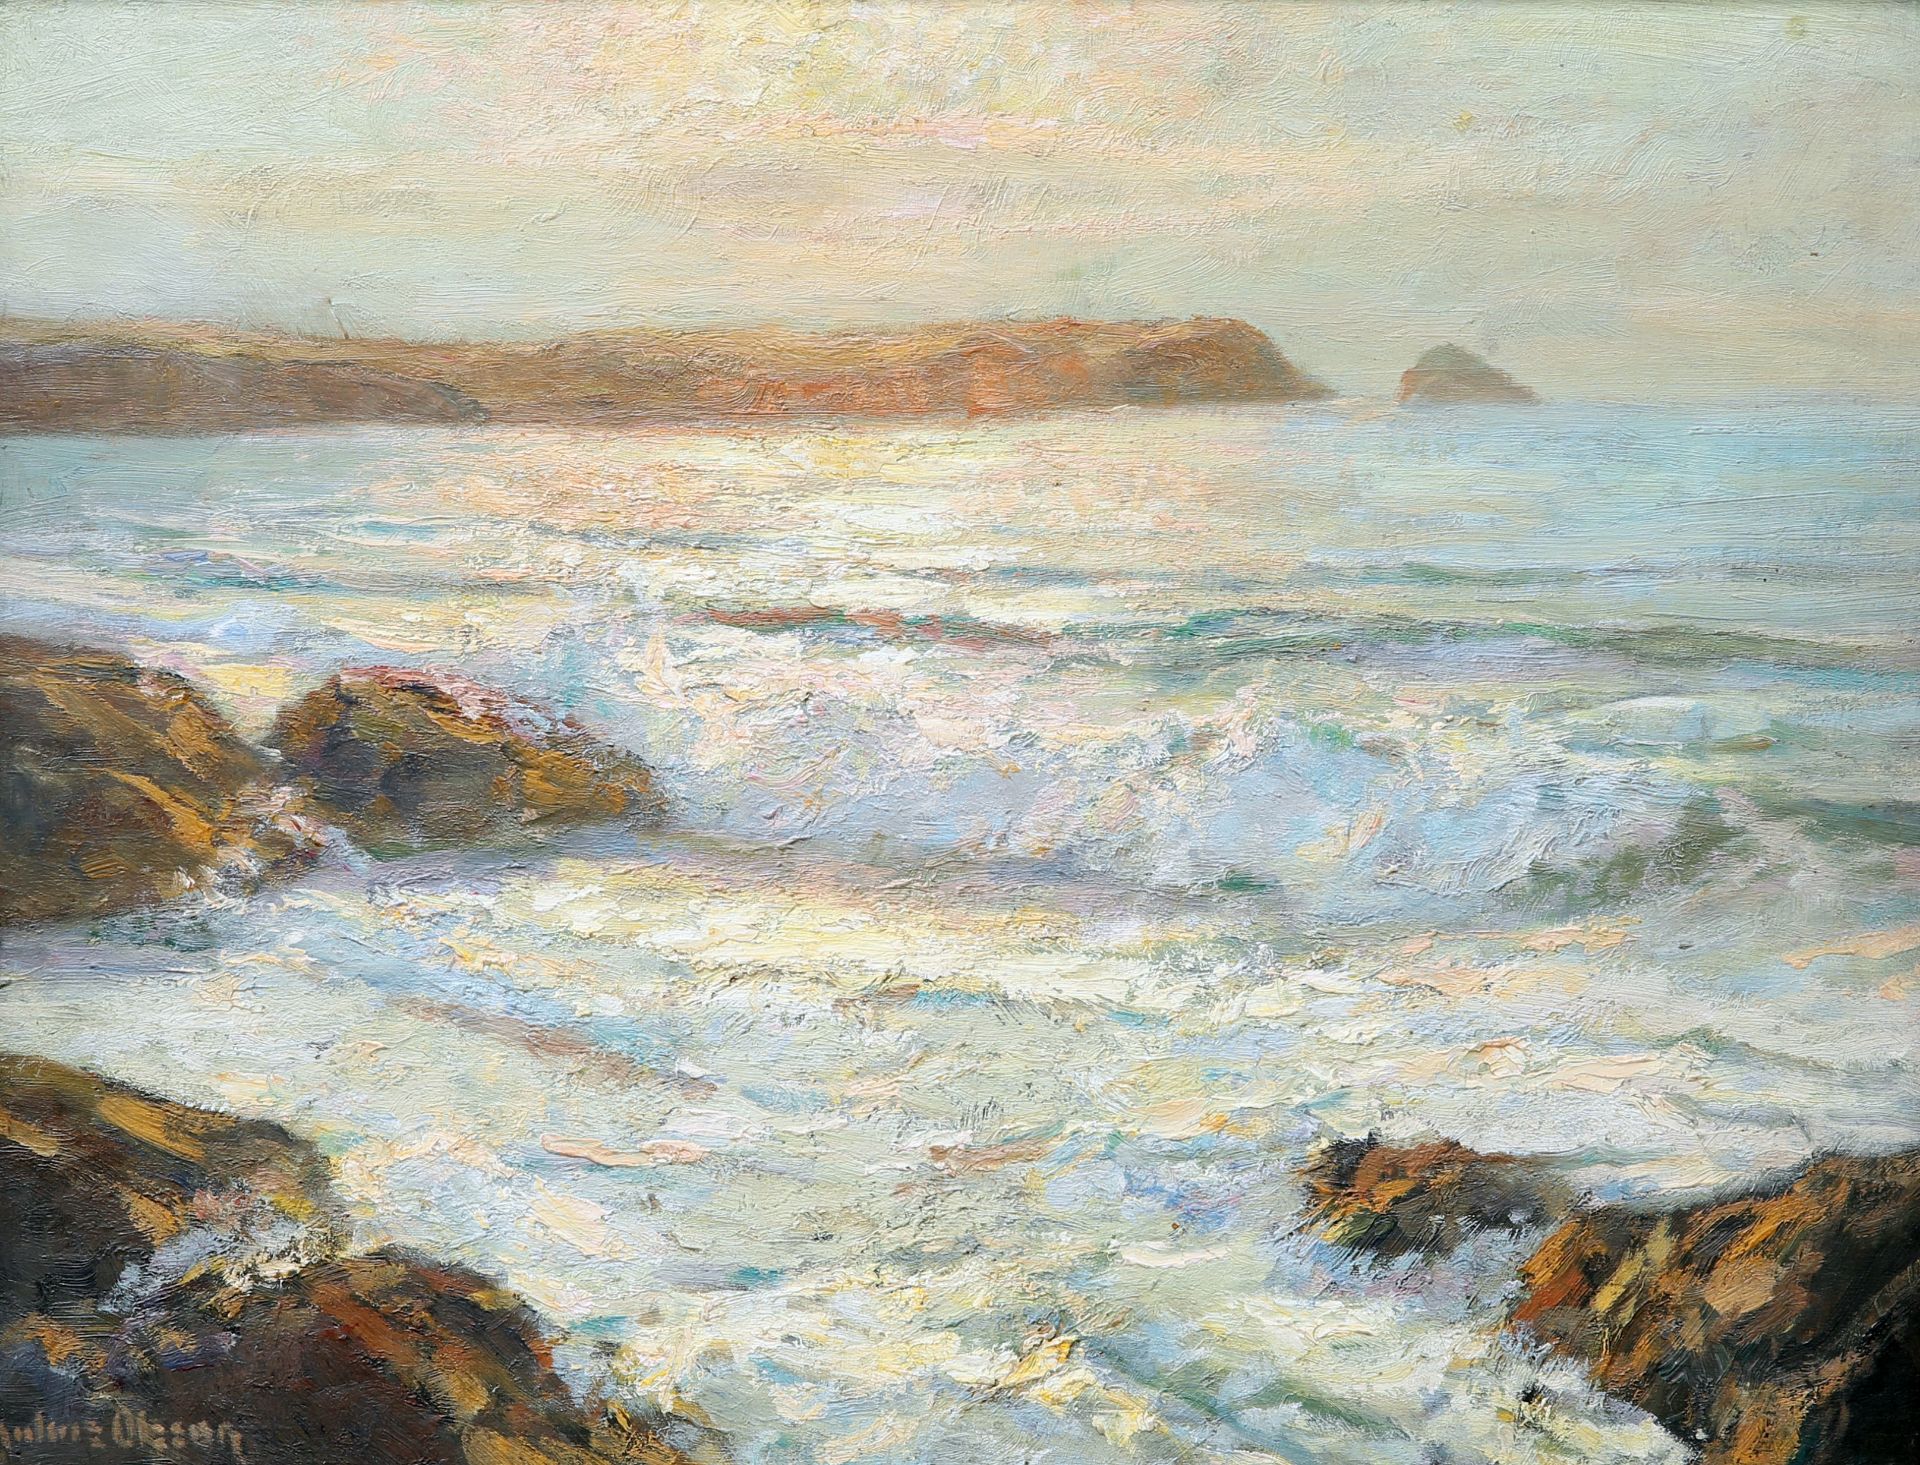 JULIUS OLSSON (1864-1942), GOLDEN HUE ON EVENING SURF